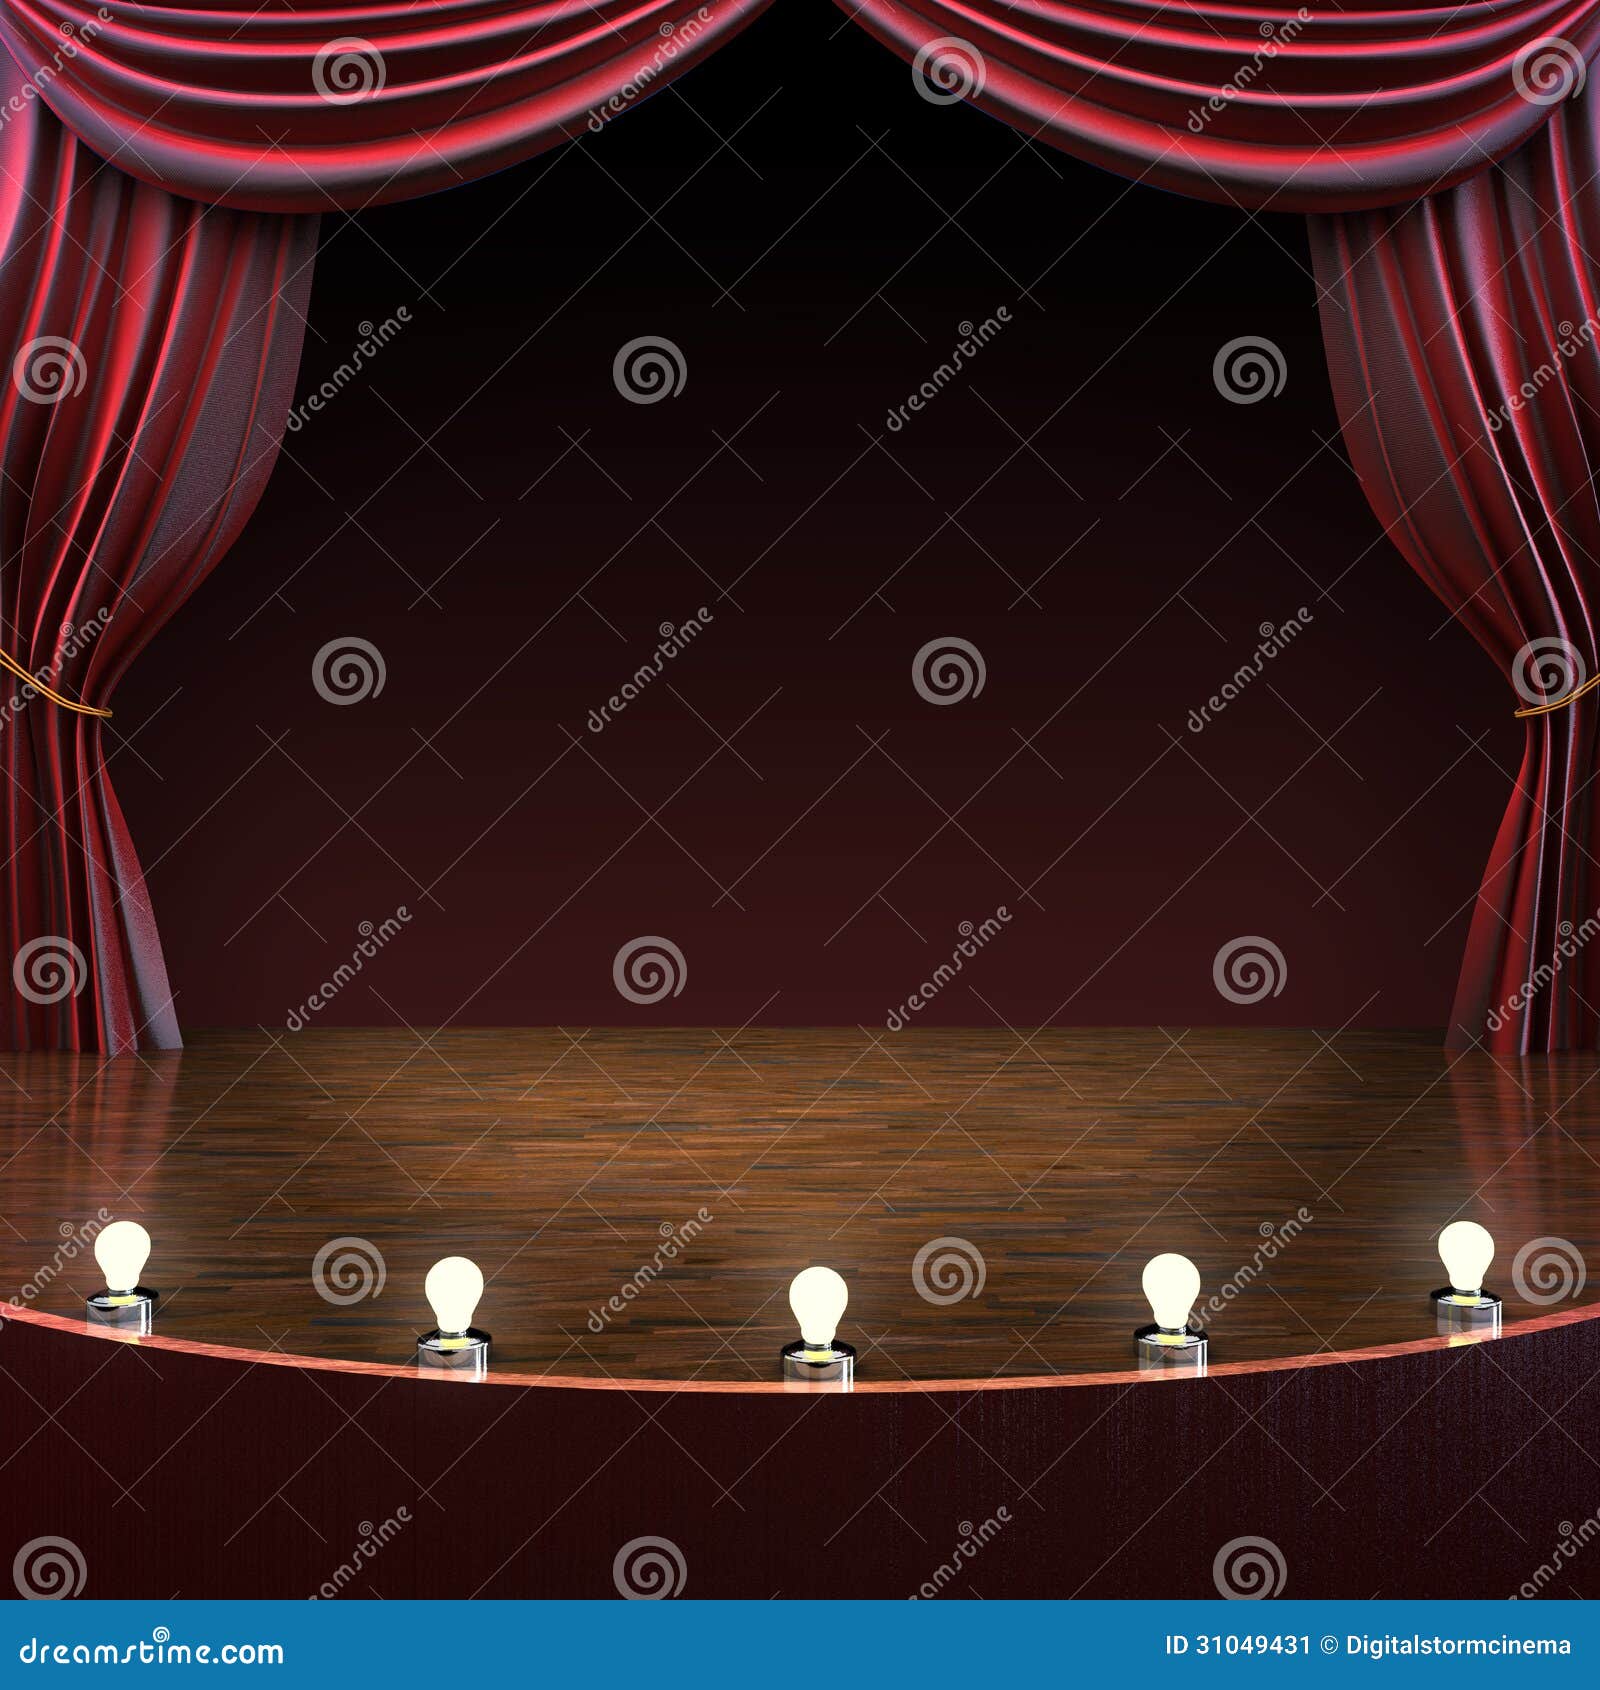 Lighted stage background stock illustration. Illustration of empty -  31049431